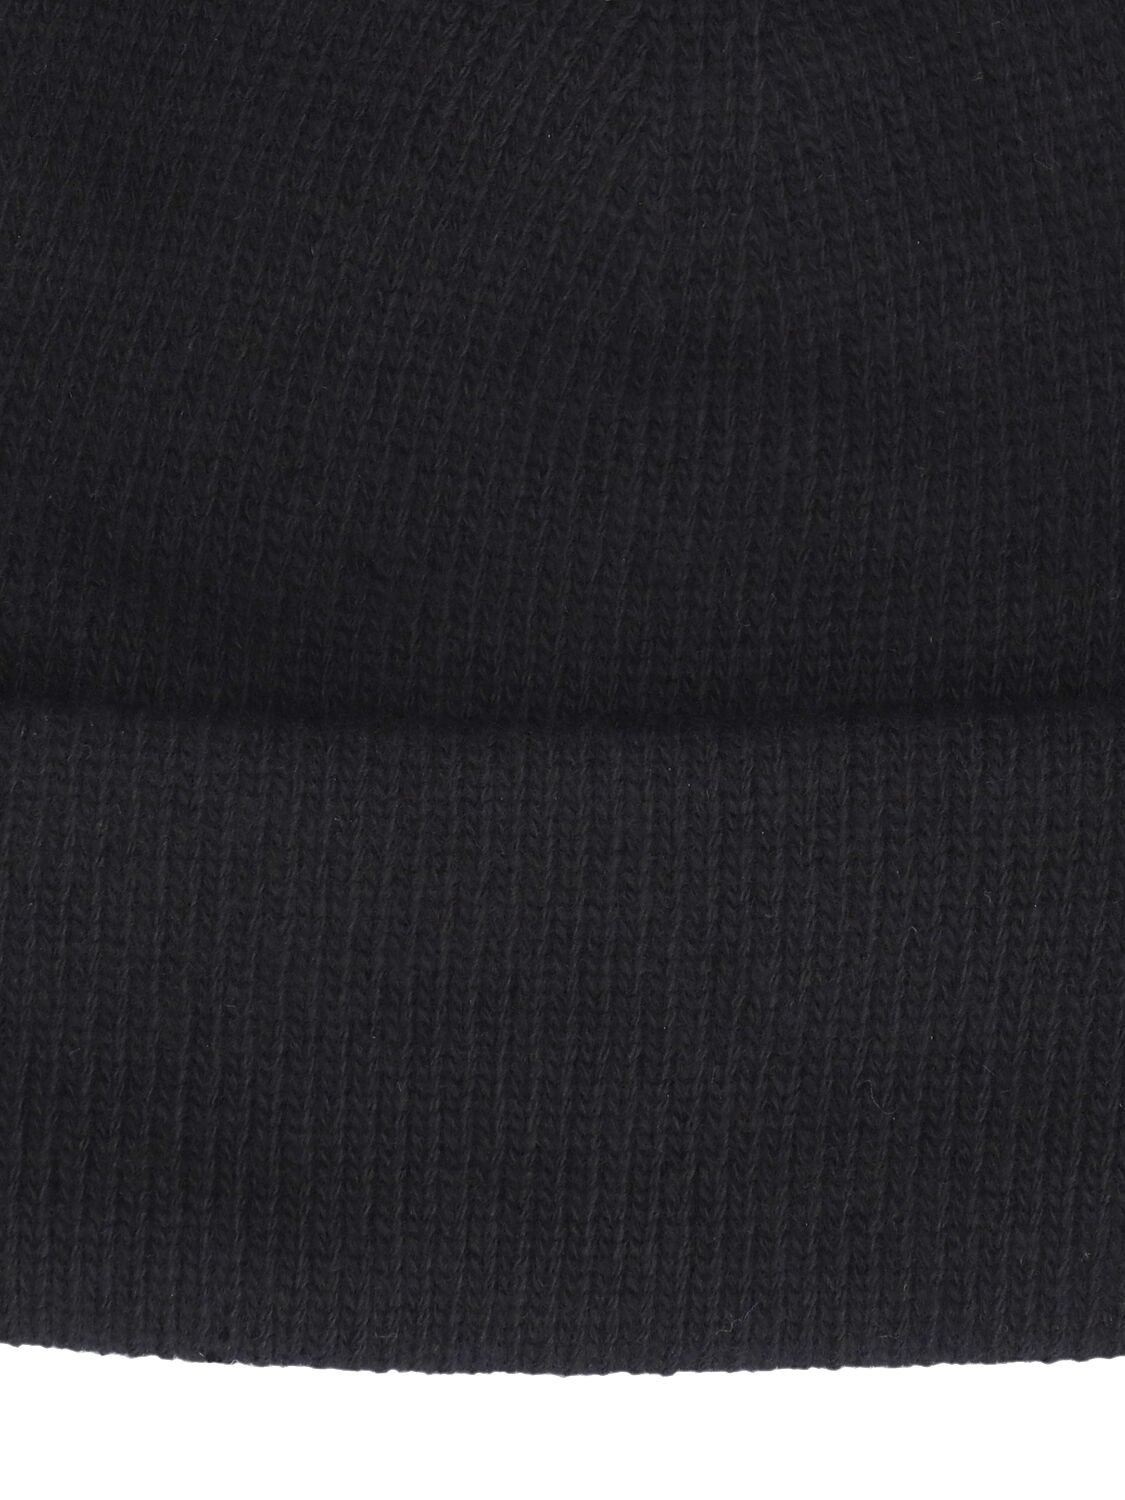 Shop Annagreta Viola Wool Hat In Black